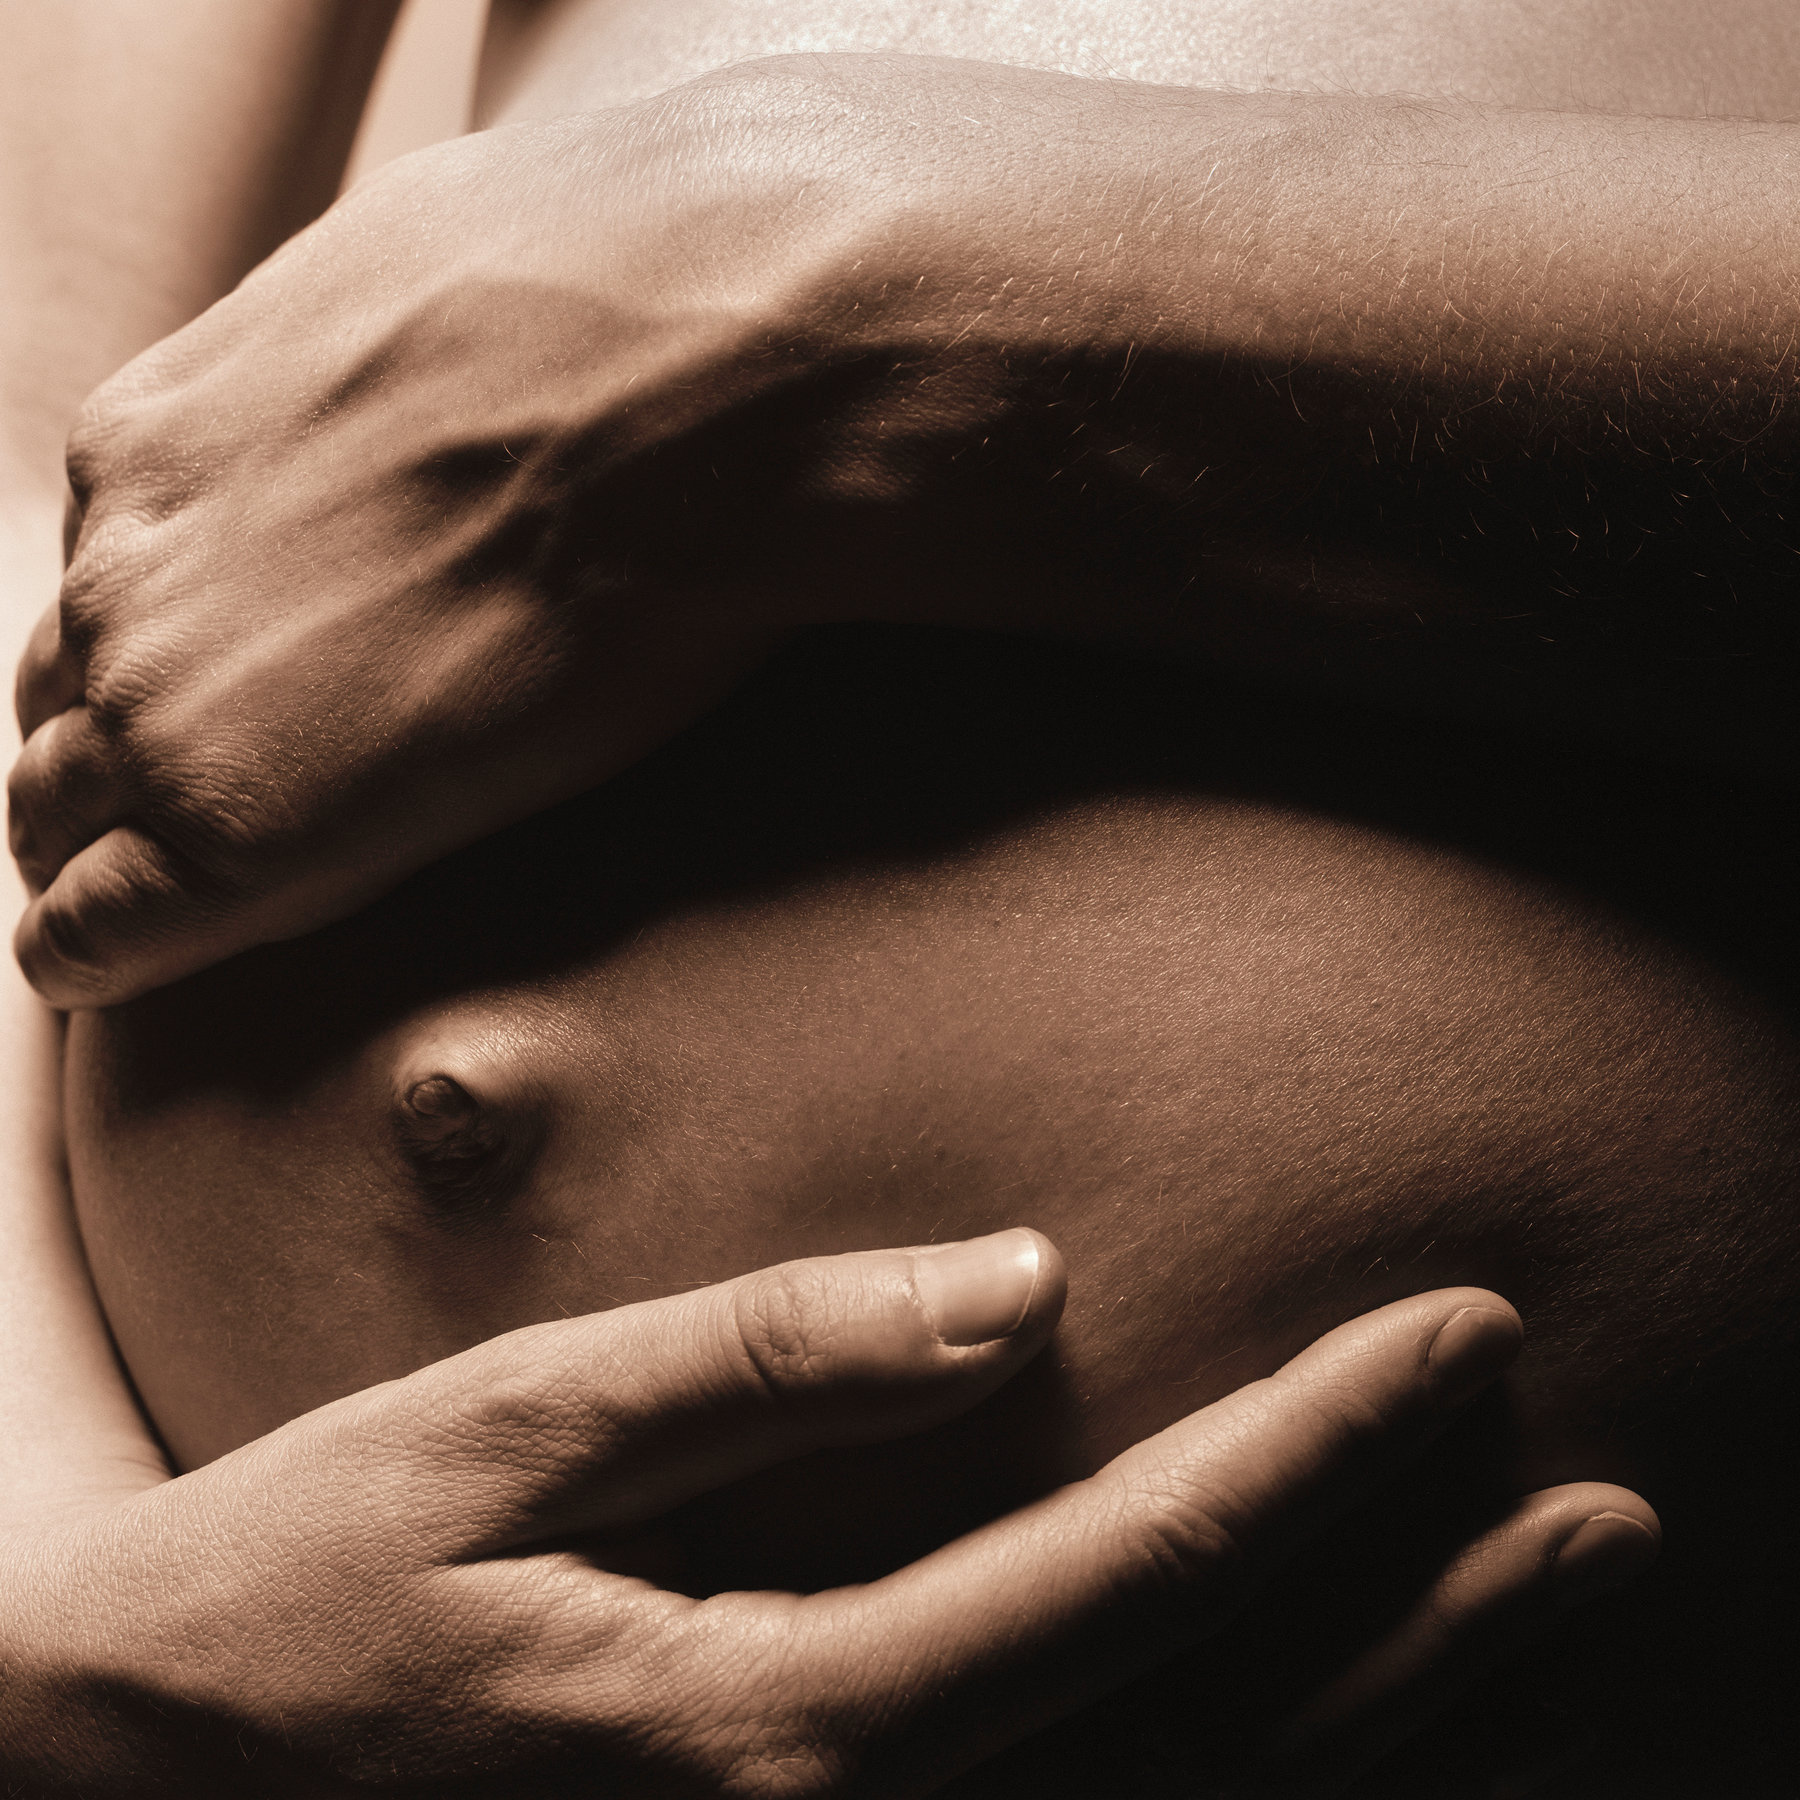 austin newlin add pregnant black girls tumblr photo